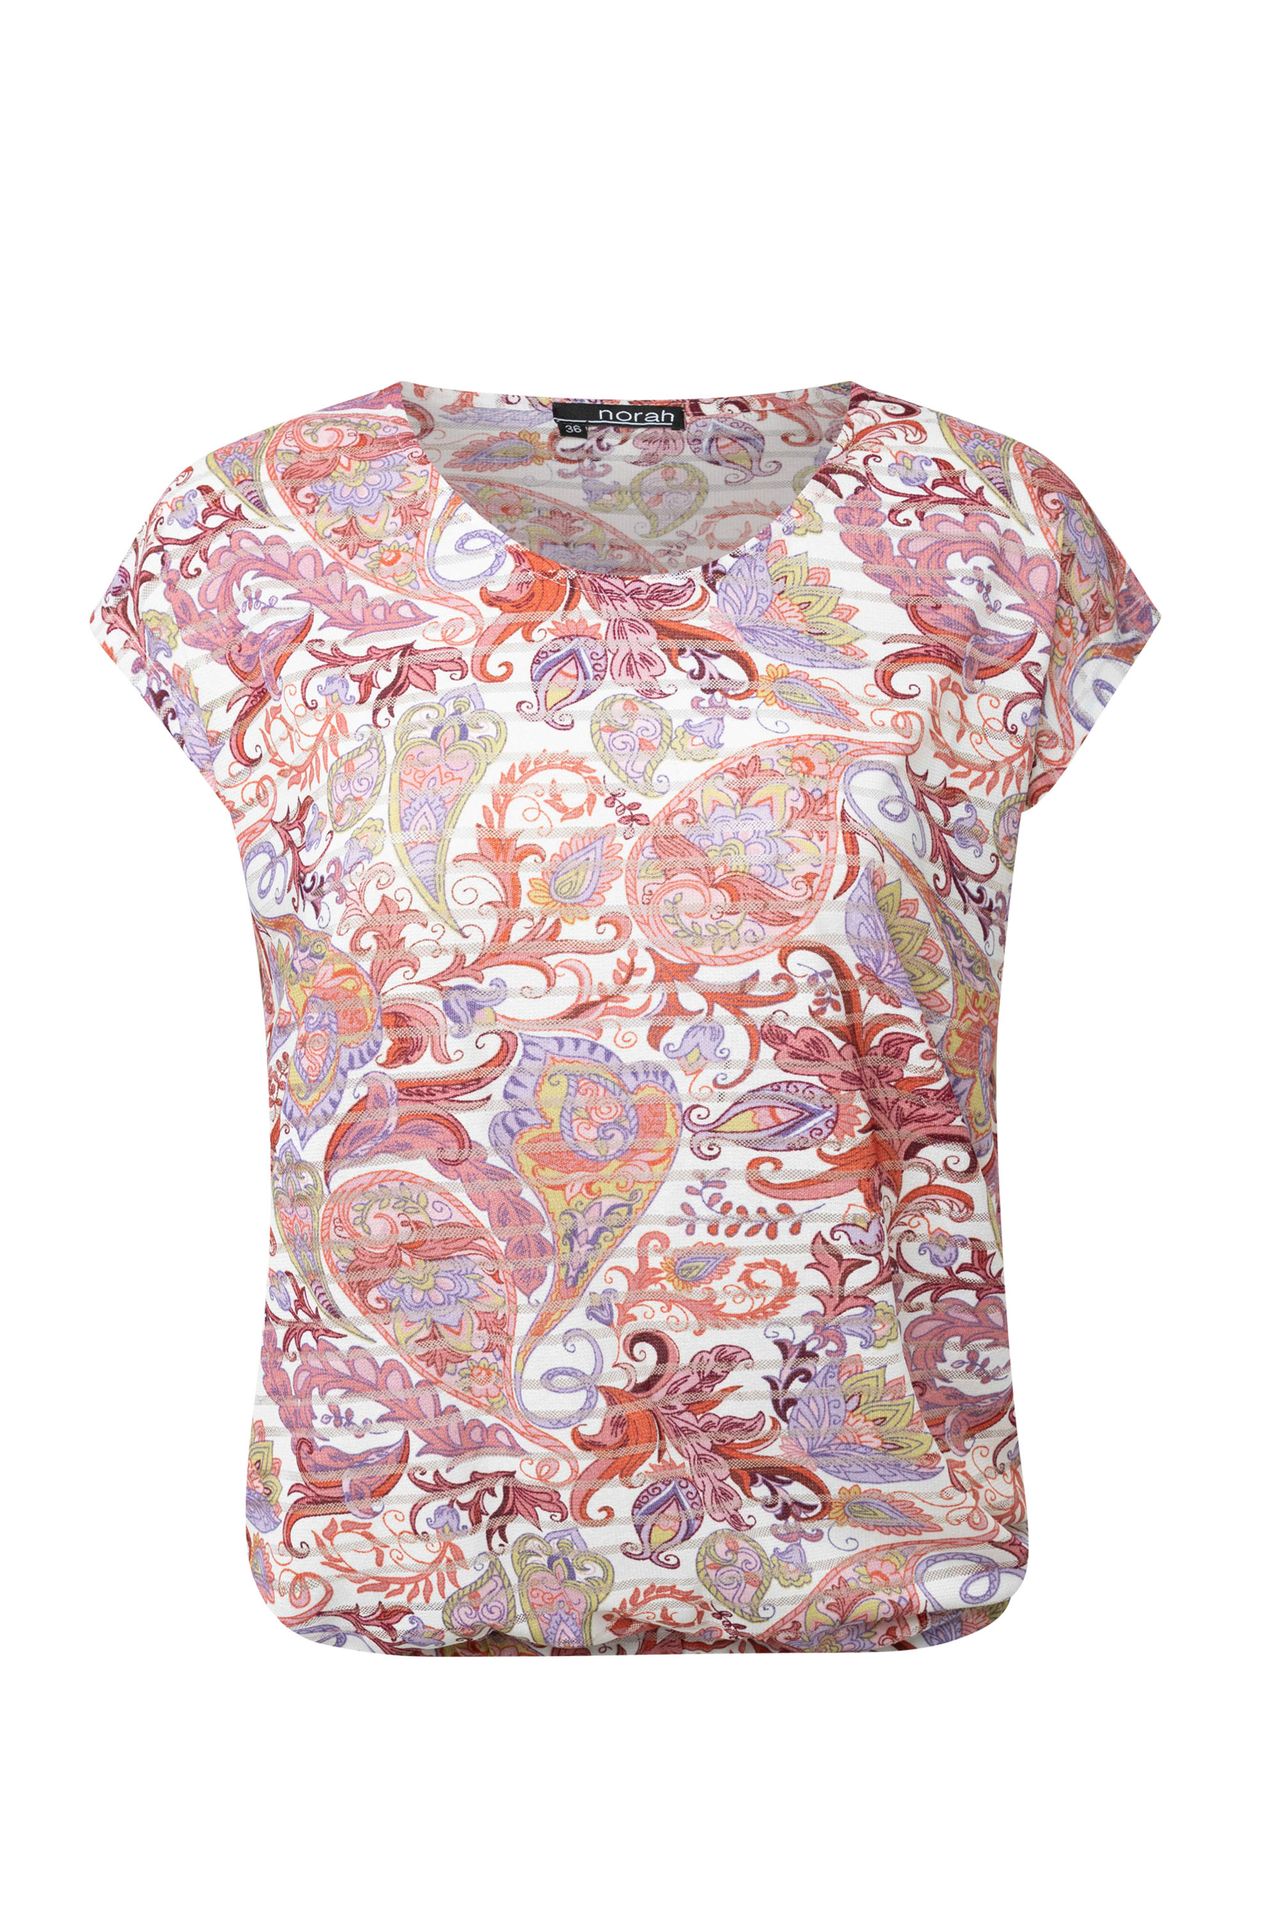 Norah Ecru shirt met kleurrijke print ecru multicolor 214169-122